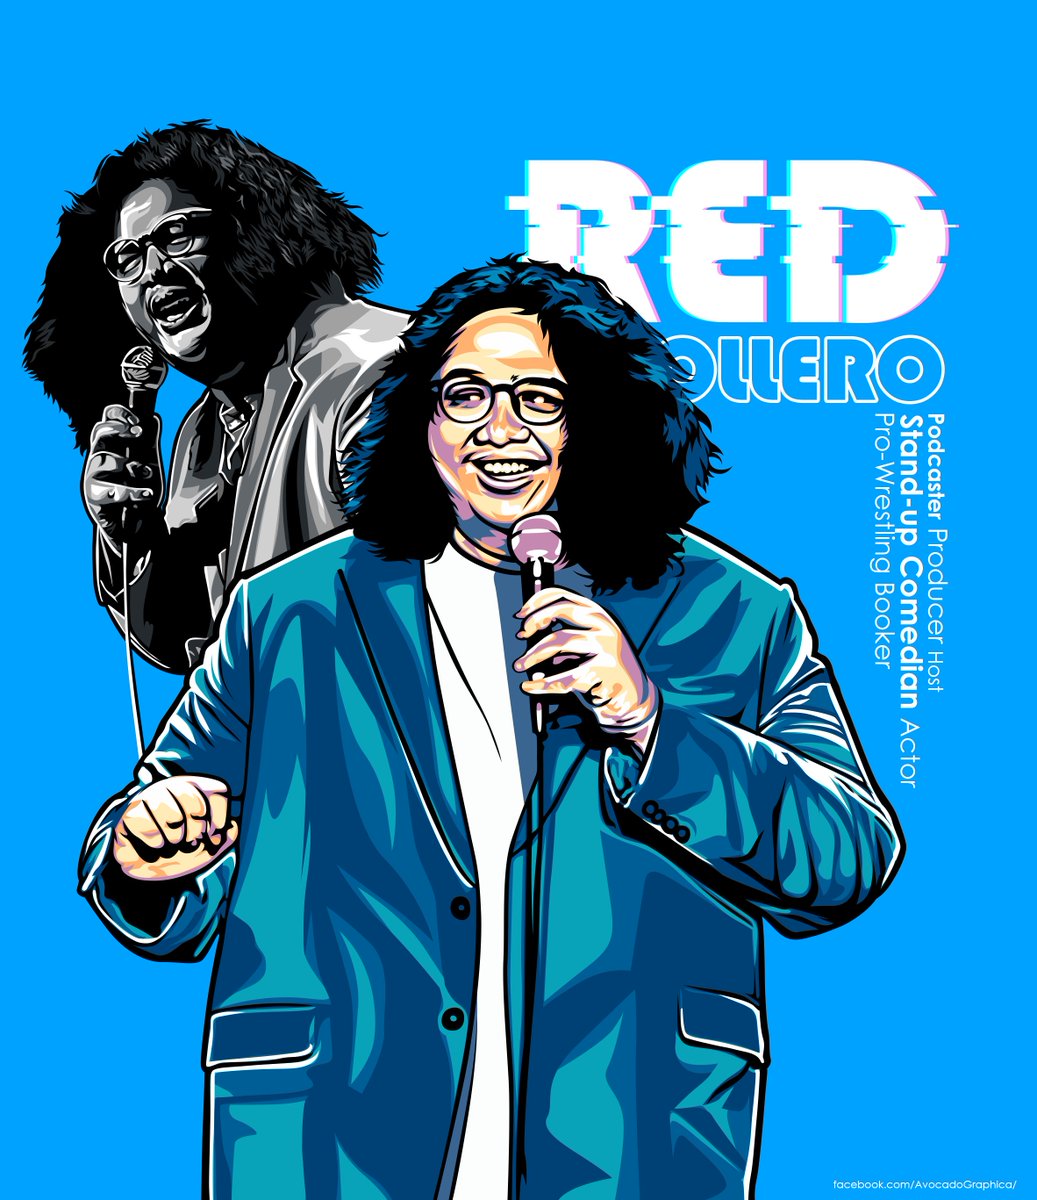 Fan art for Red Ollero
#comedy  #Filipinocomedian #podcaster